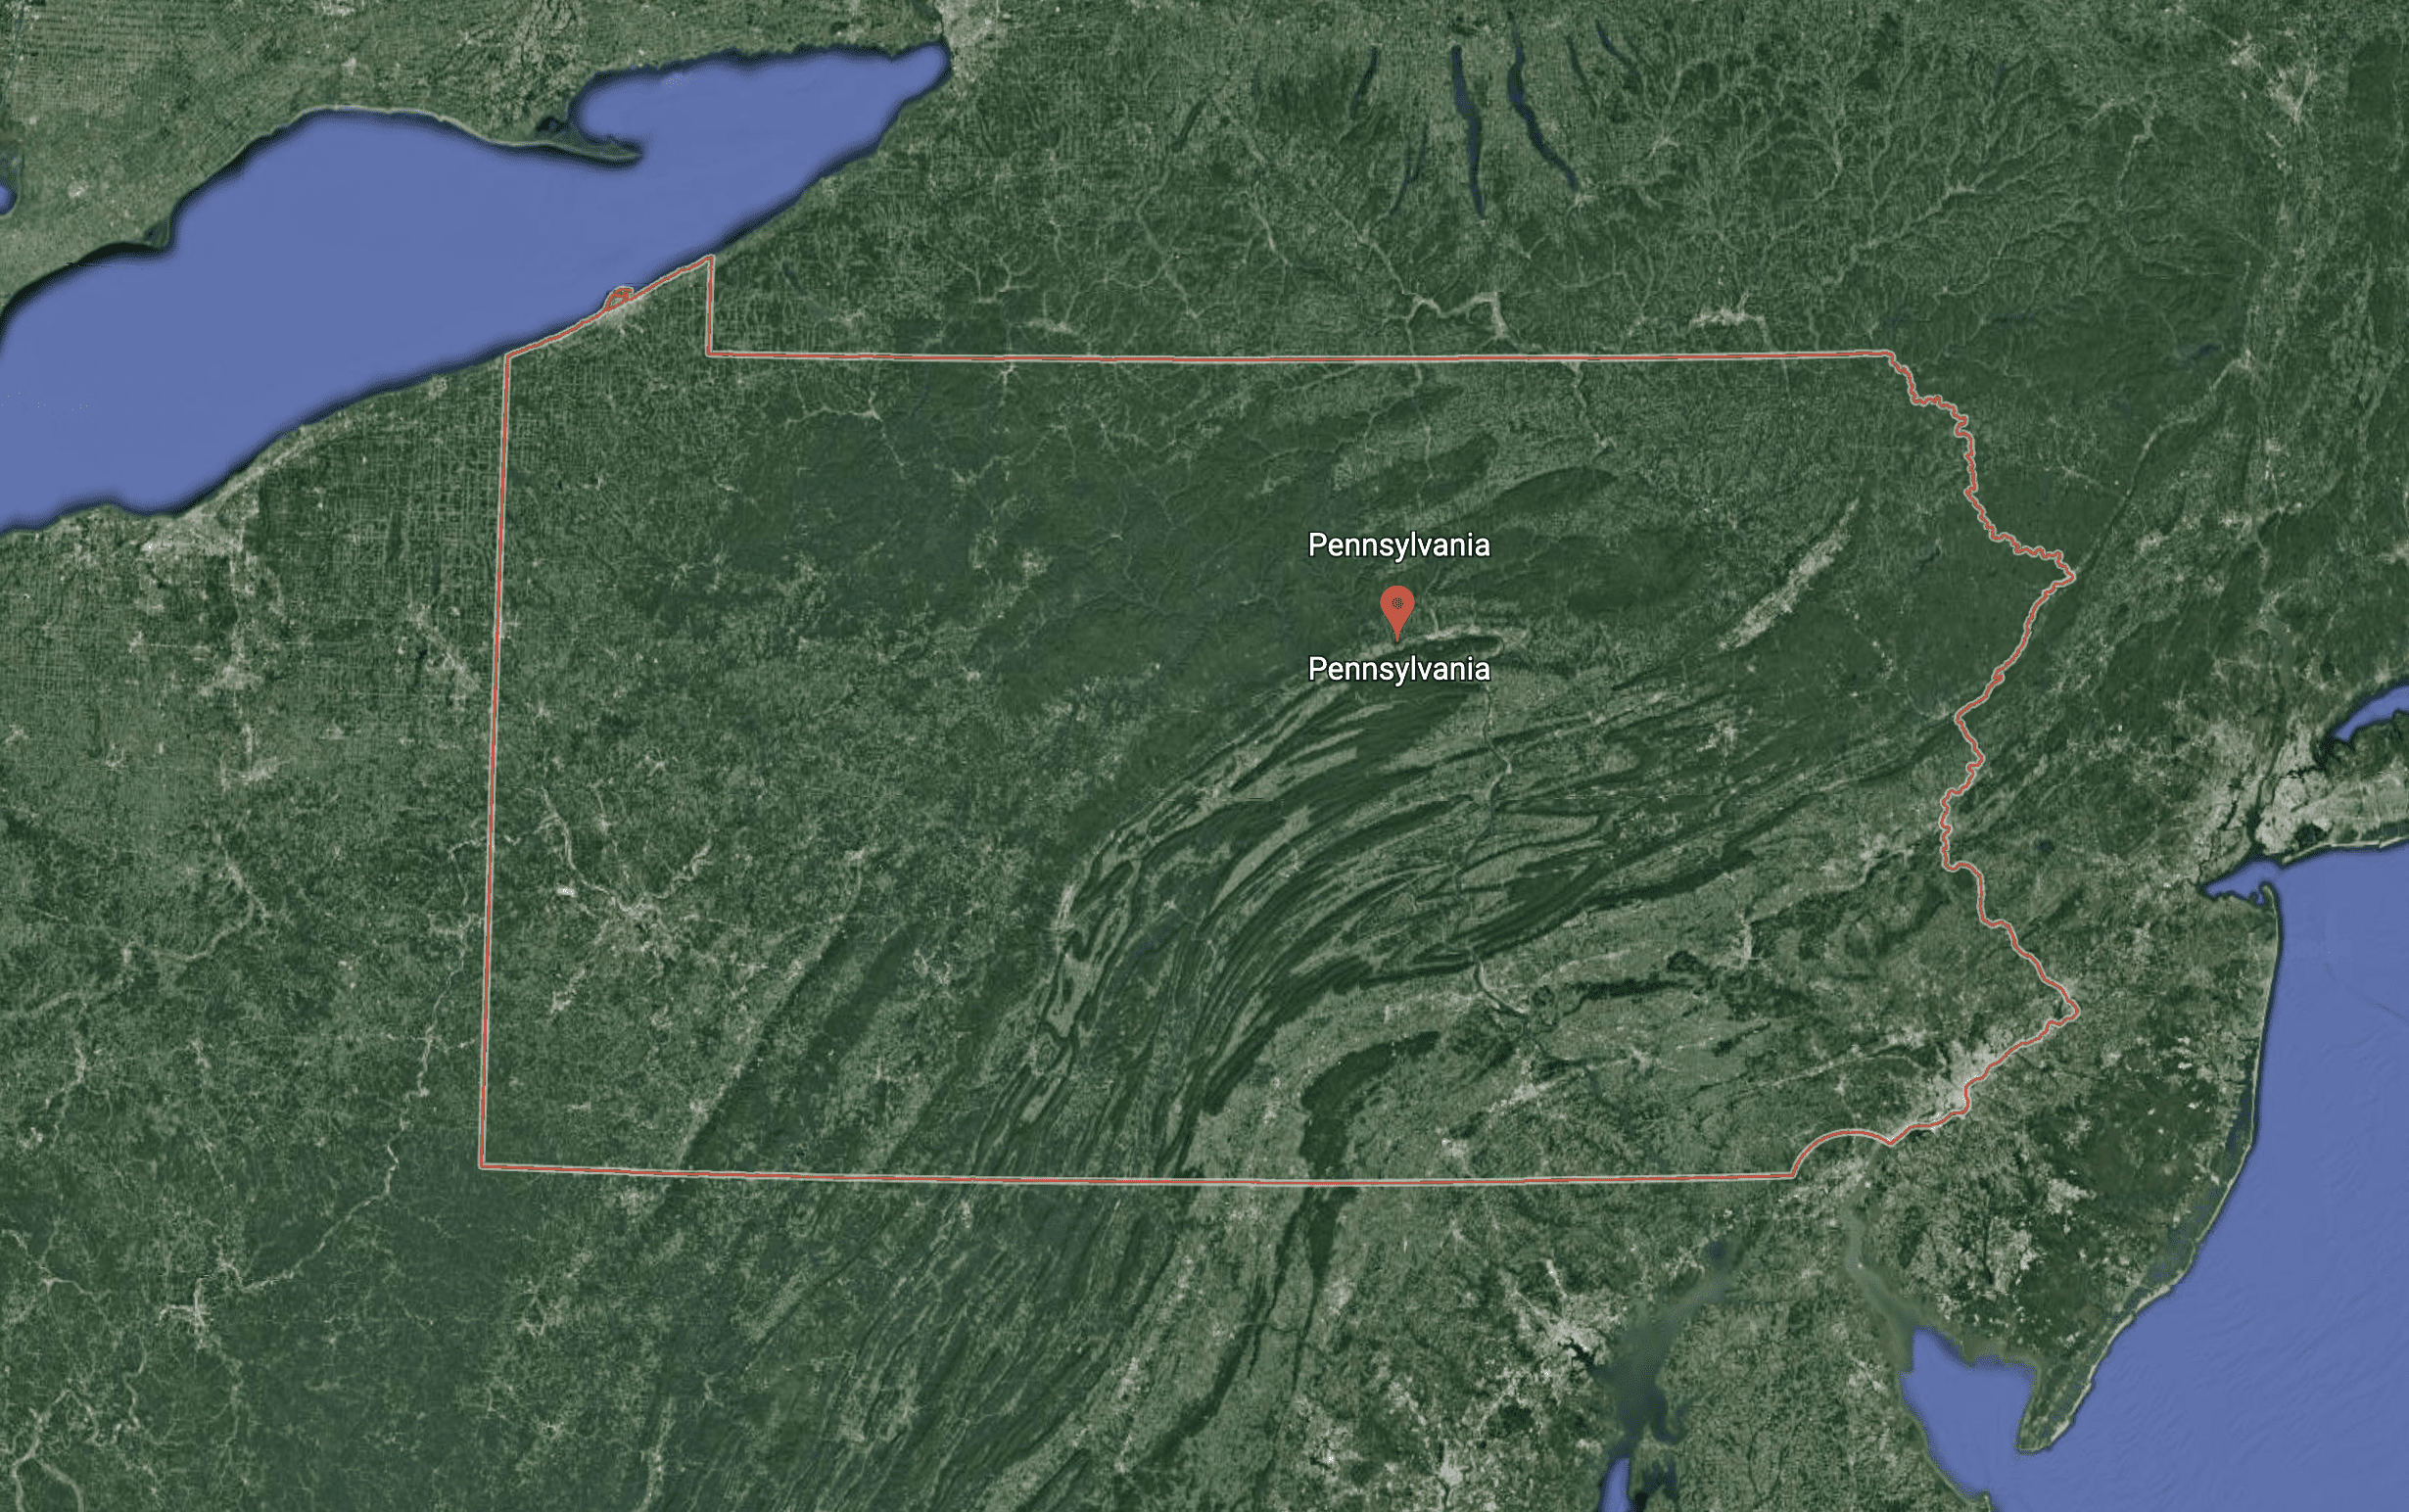 Satellite overhead image of Pennsylvania from Google Earth 2022